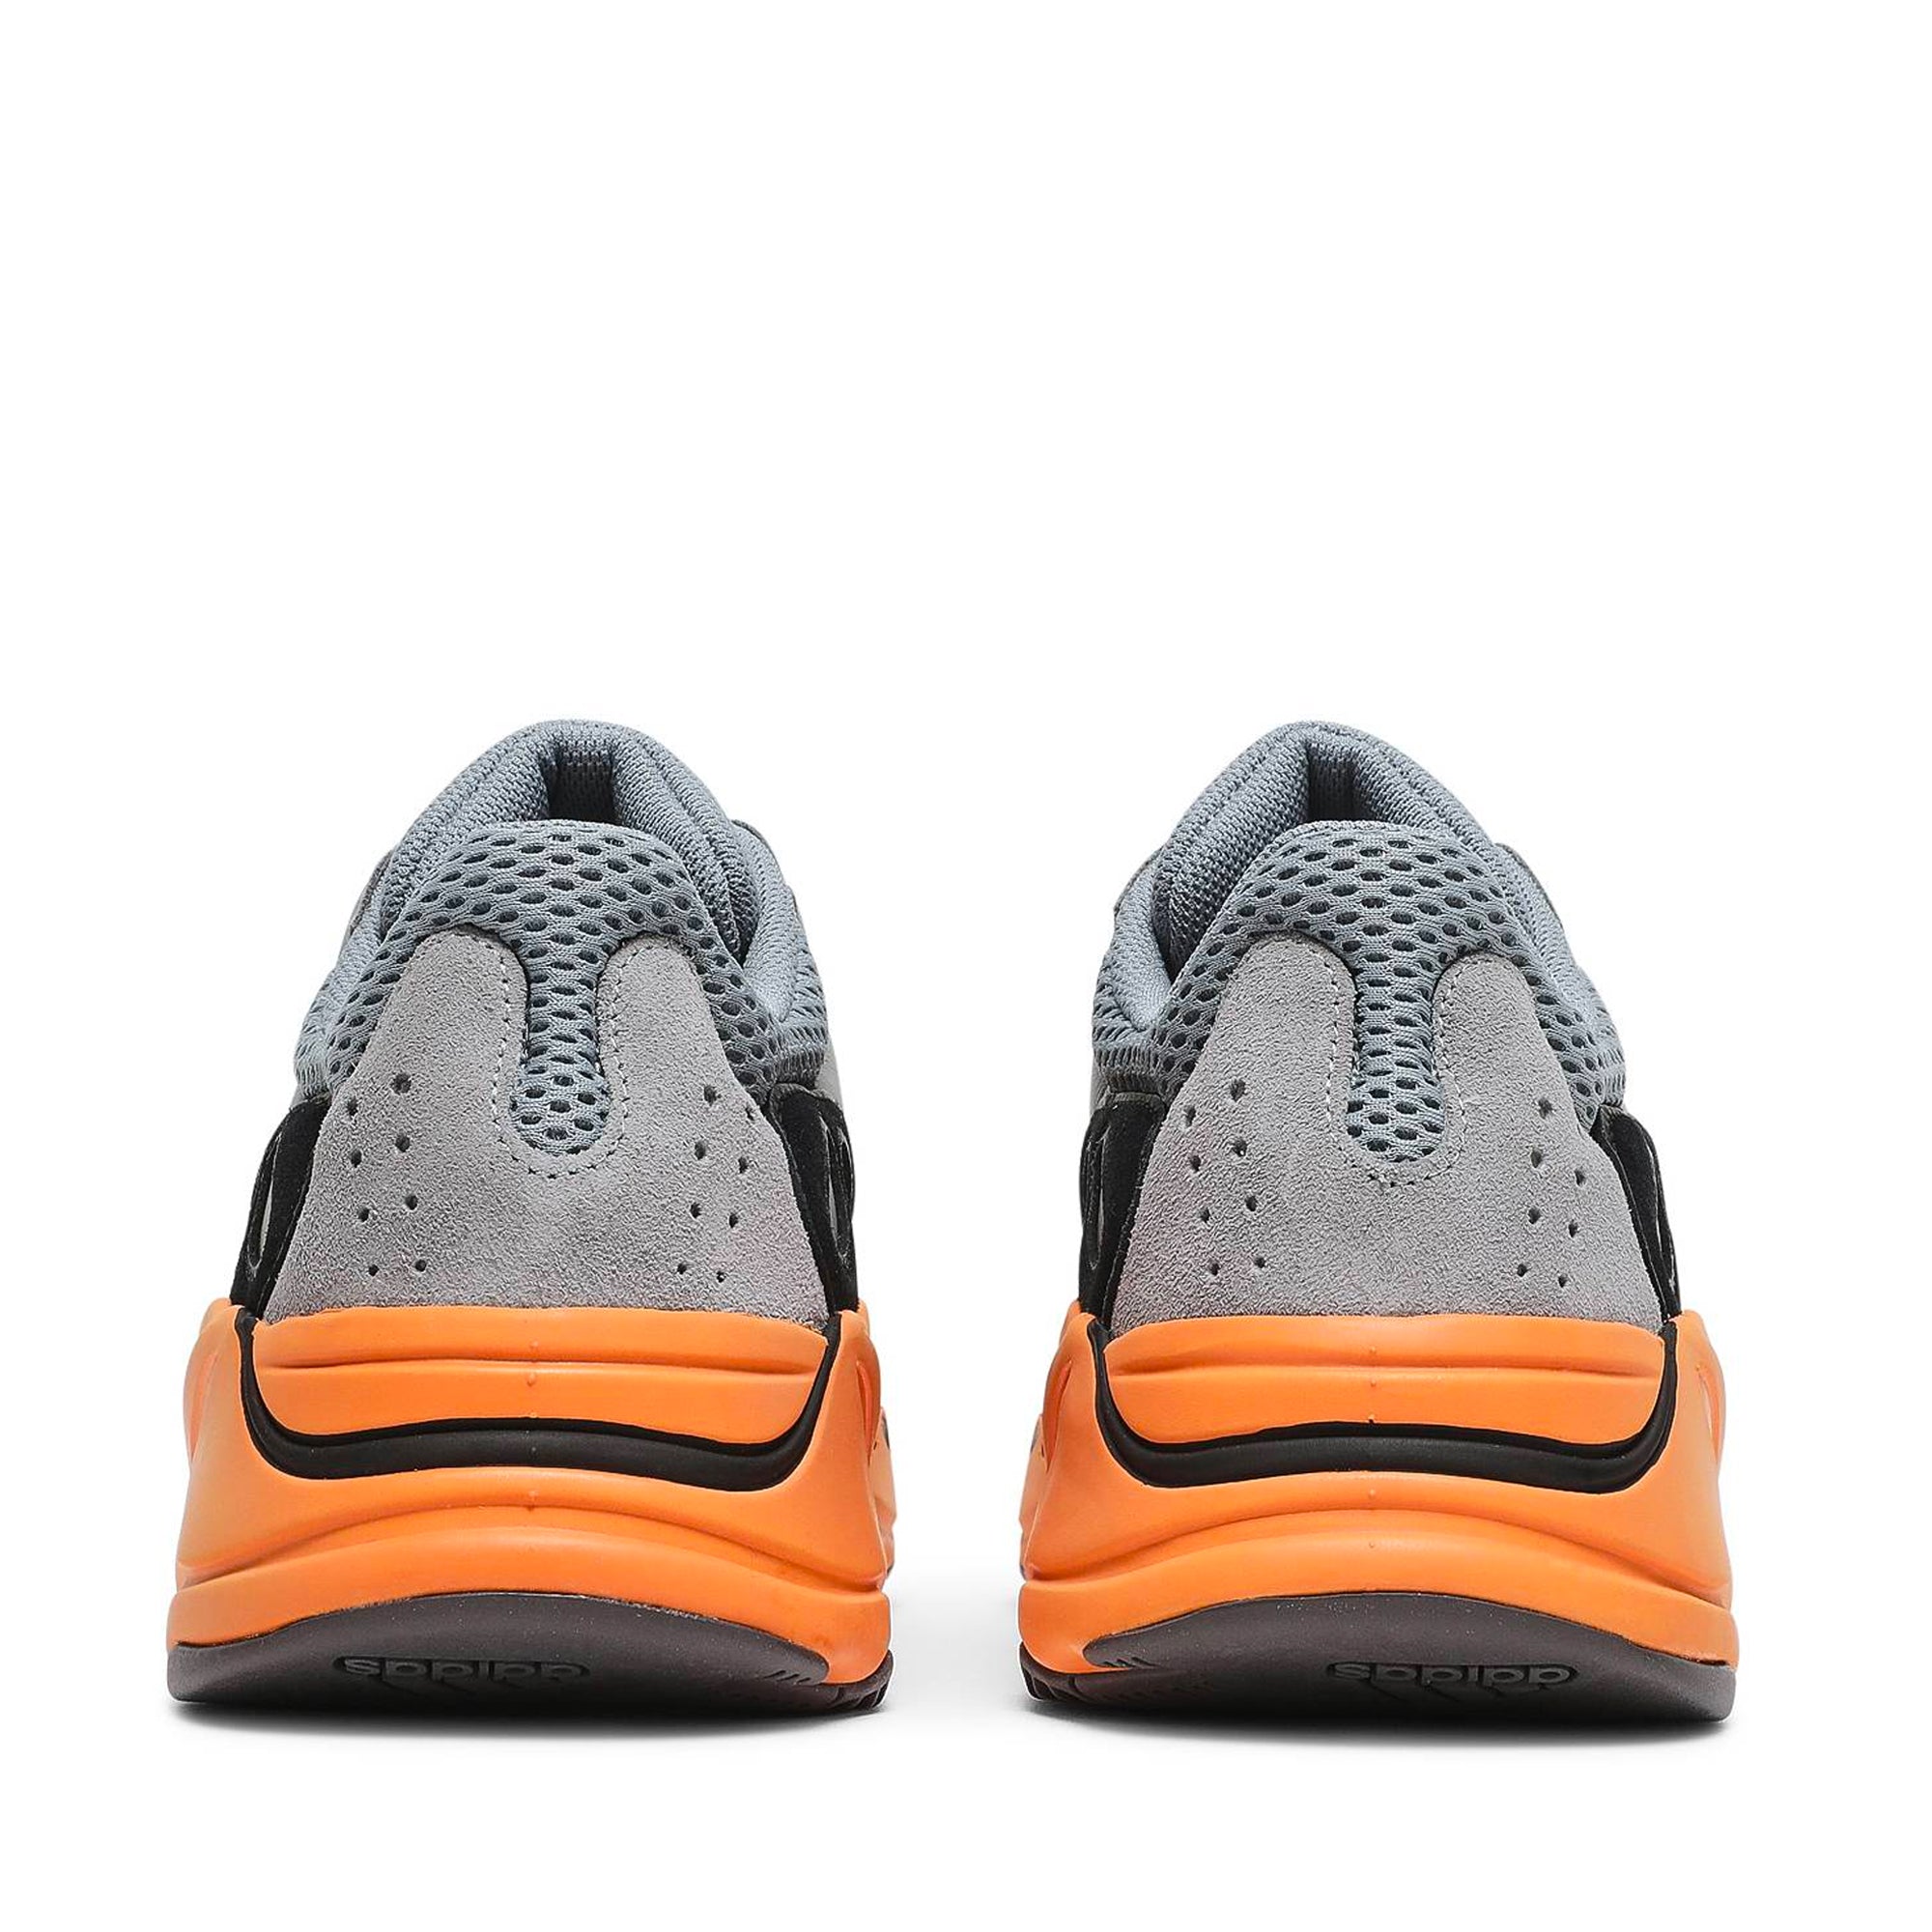 Adidas Yeezy Boost 700 Wash Orange-PLUS